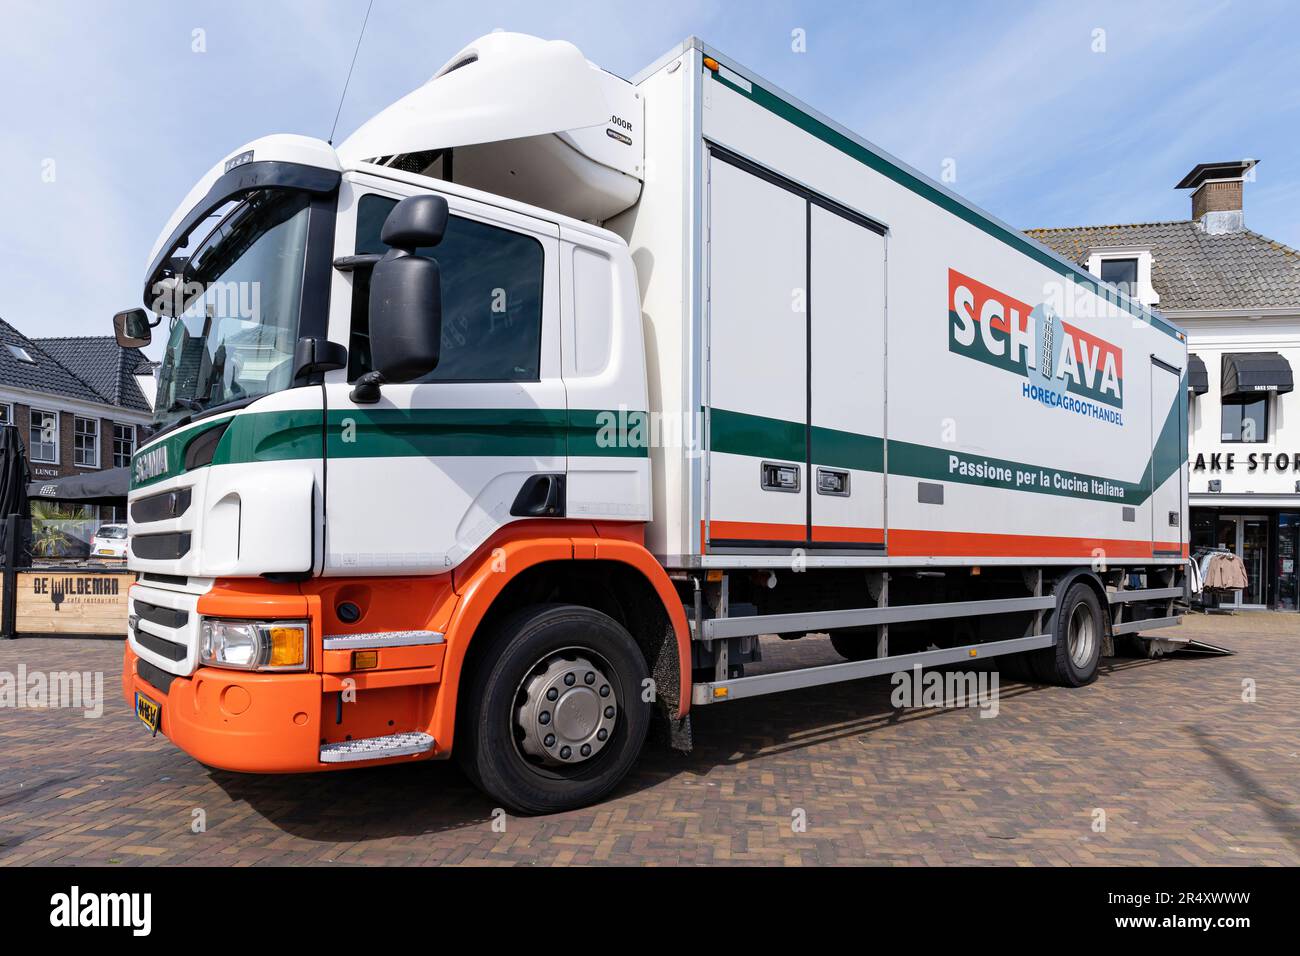 Schiava Truck im Lemmer, Niederlande Stockfoto